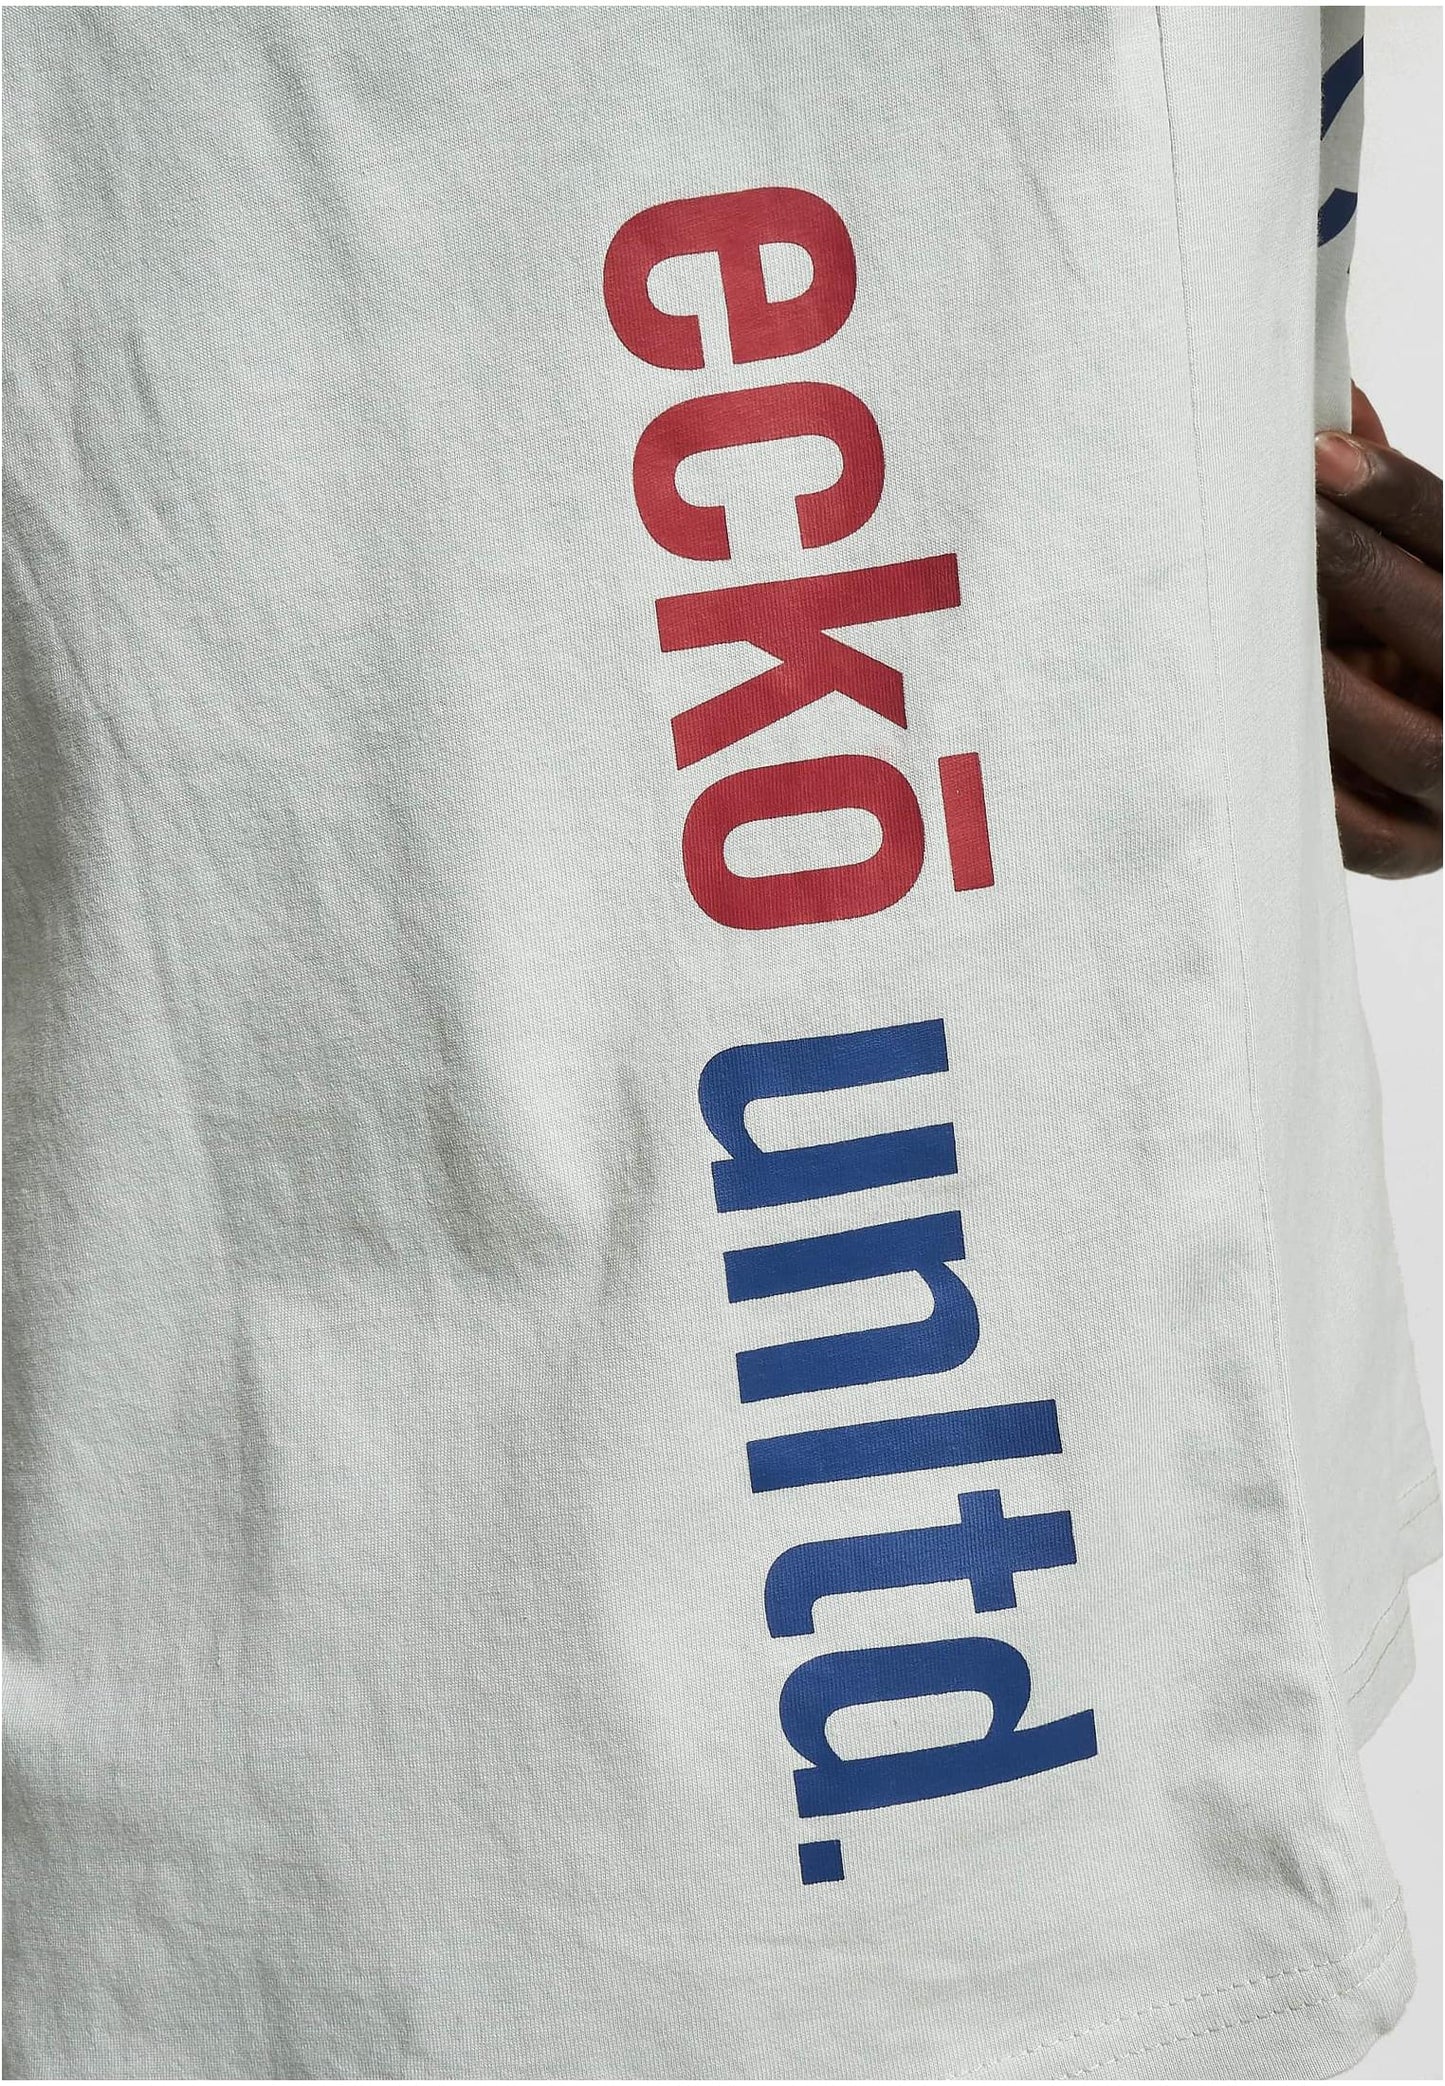 Ecko Unltd. Grande T-Shirt grey/red/blue